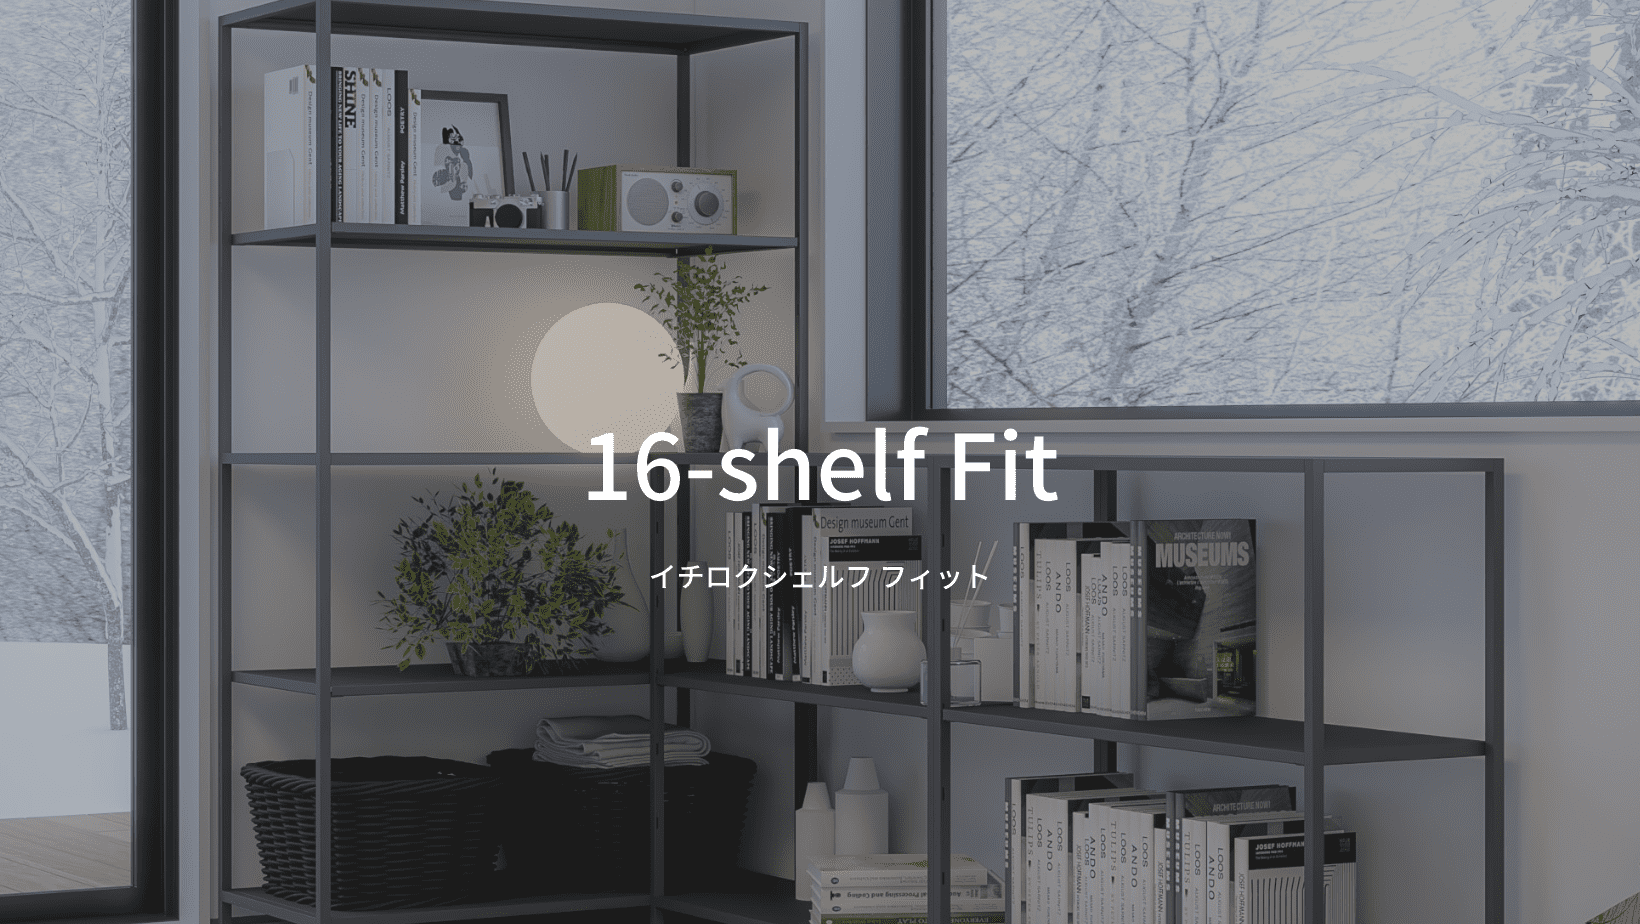 16-shelf Fit